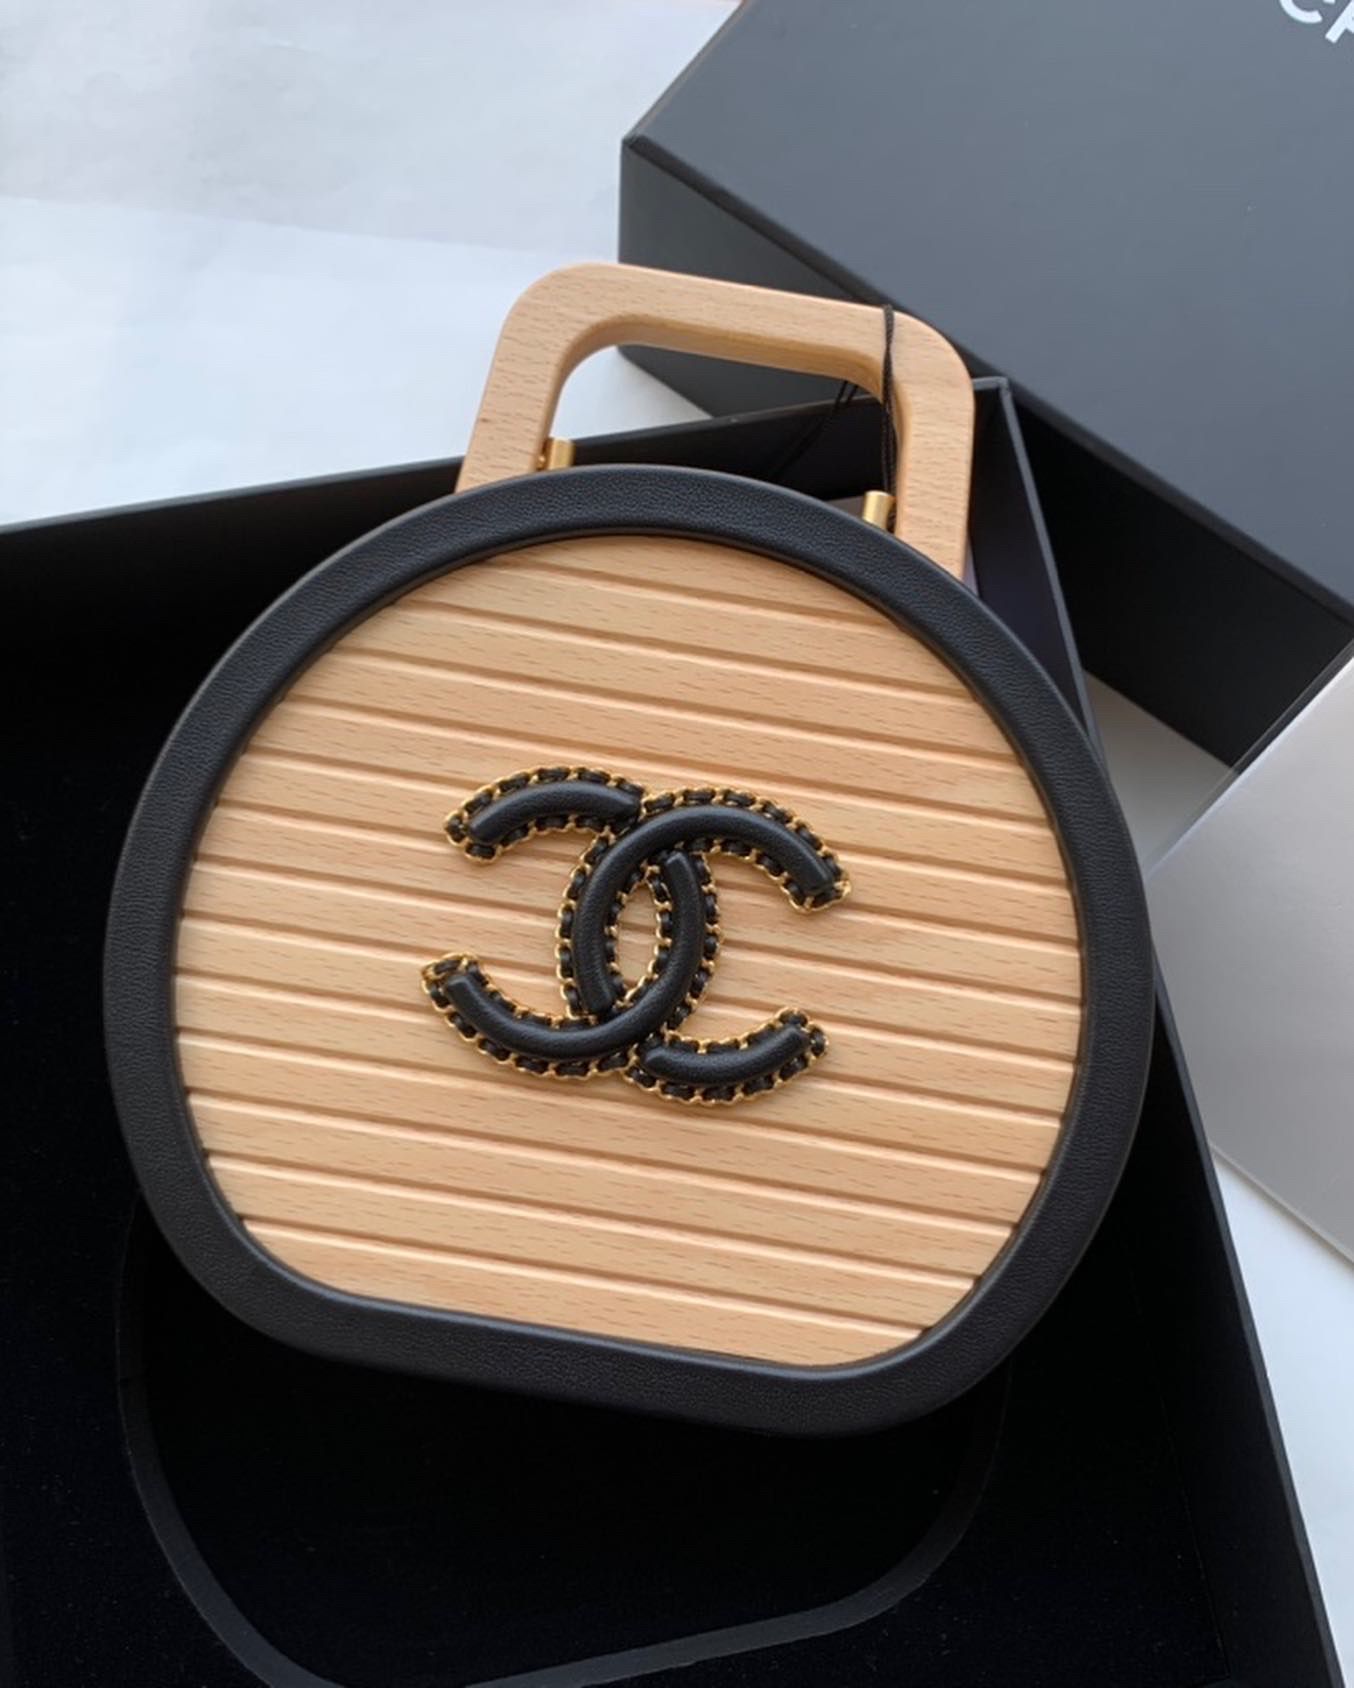 Chanel Beech Wood Vanity Case